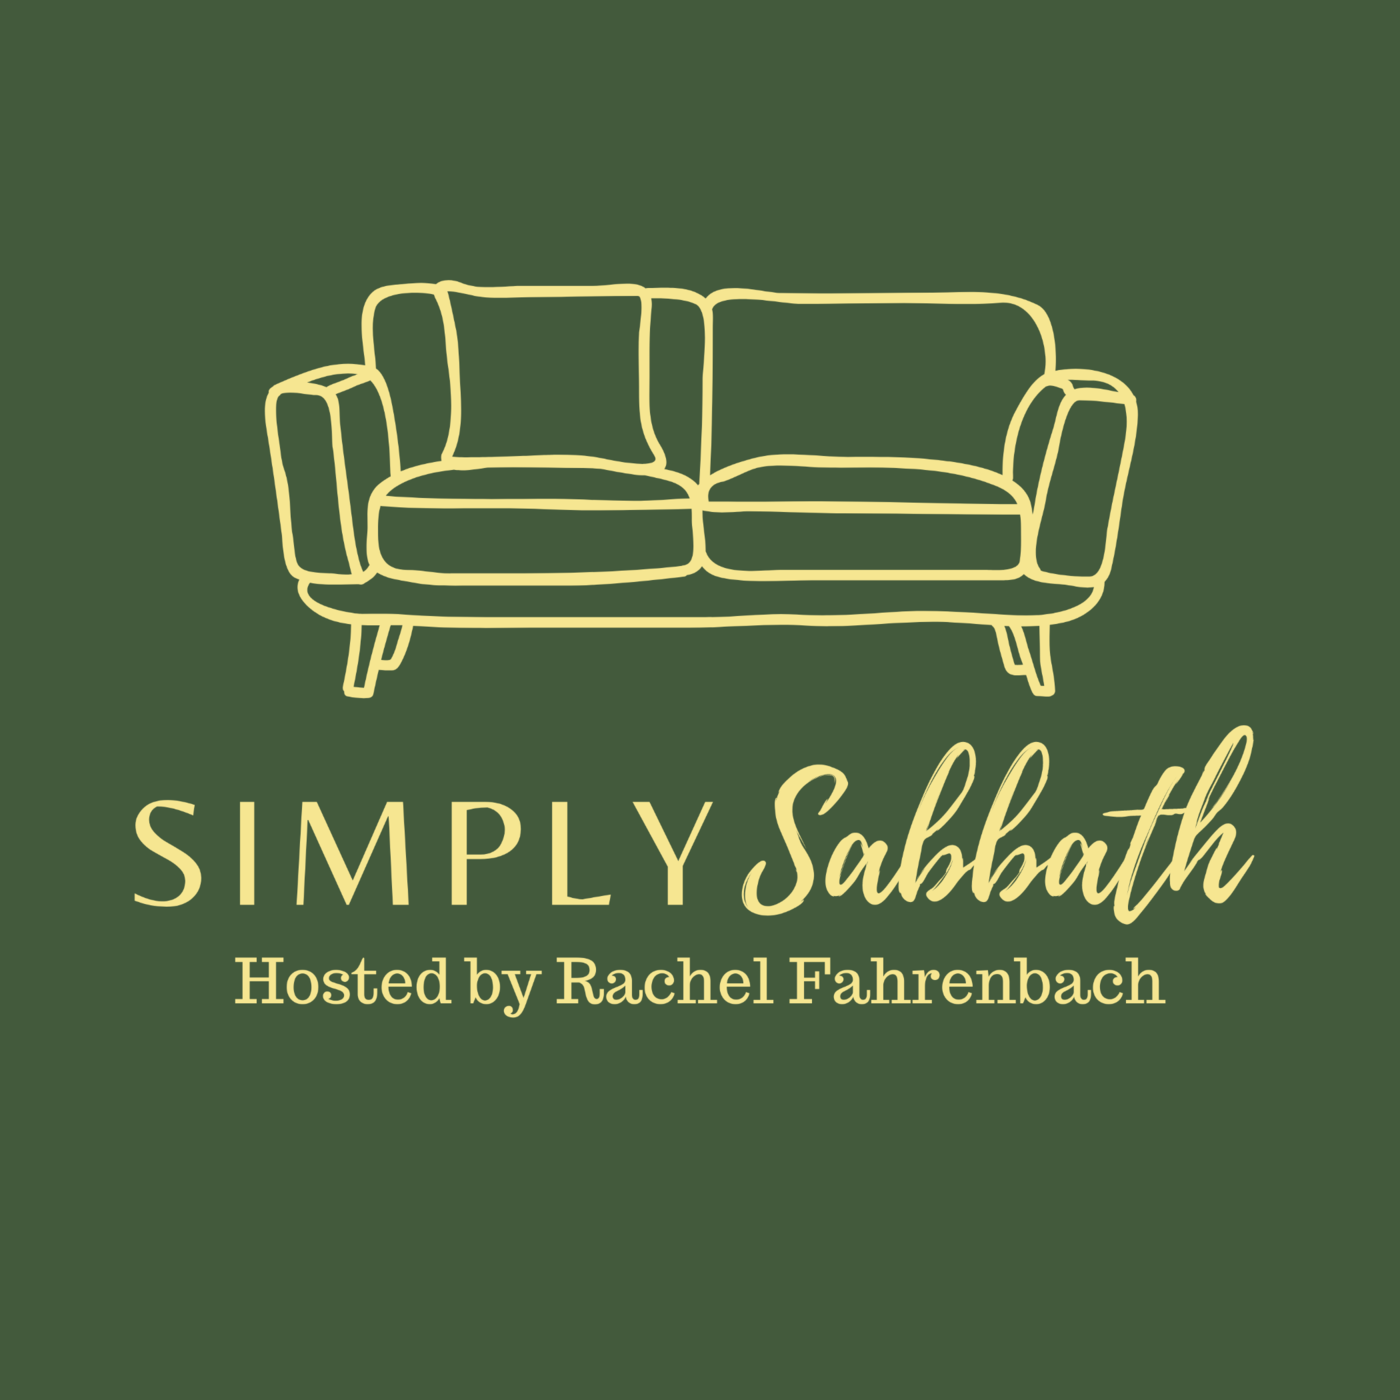 Ep 34: Should Christians Observe Sabbath? (pt. 1)